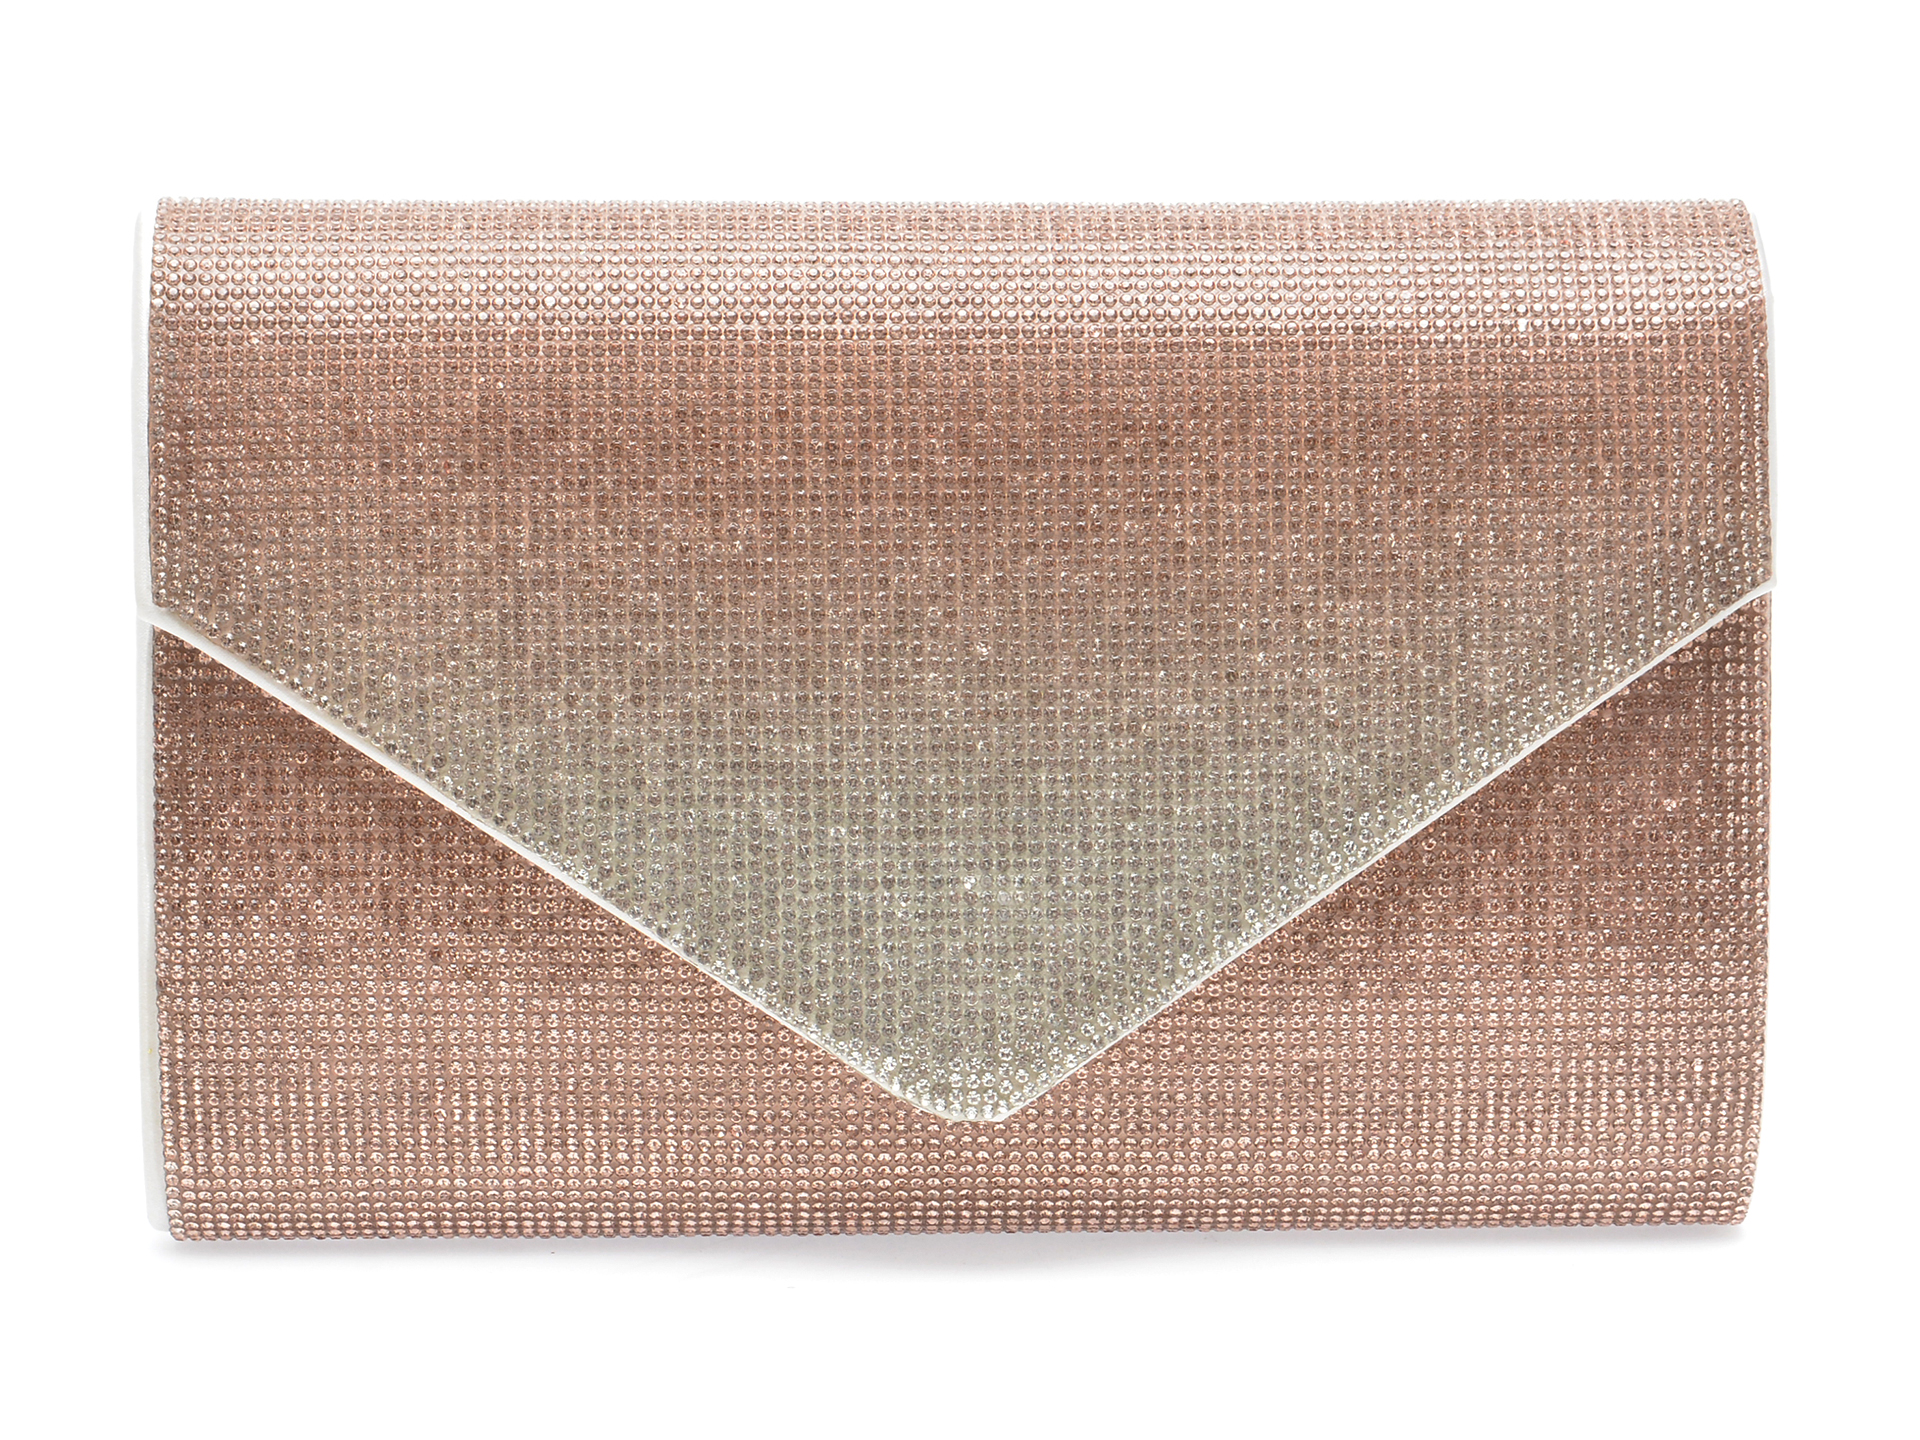 Poseta plic ALDO roz, GEAVEN651, din material textil Aldo